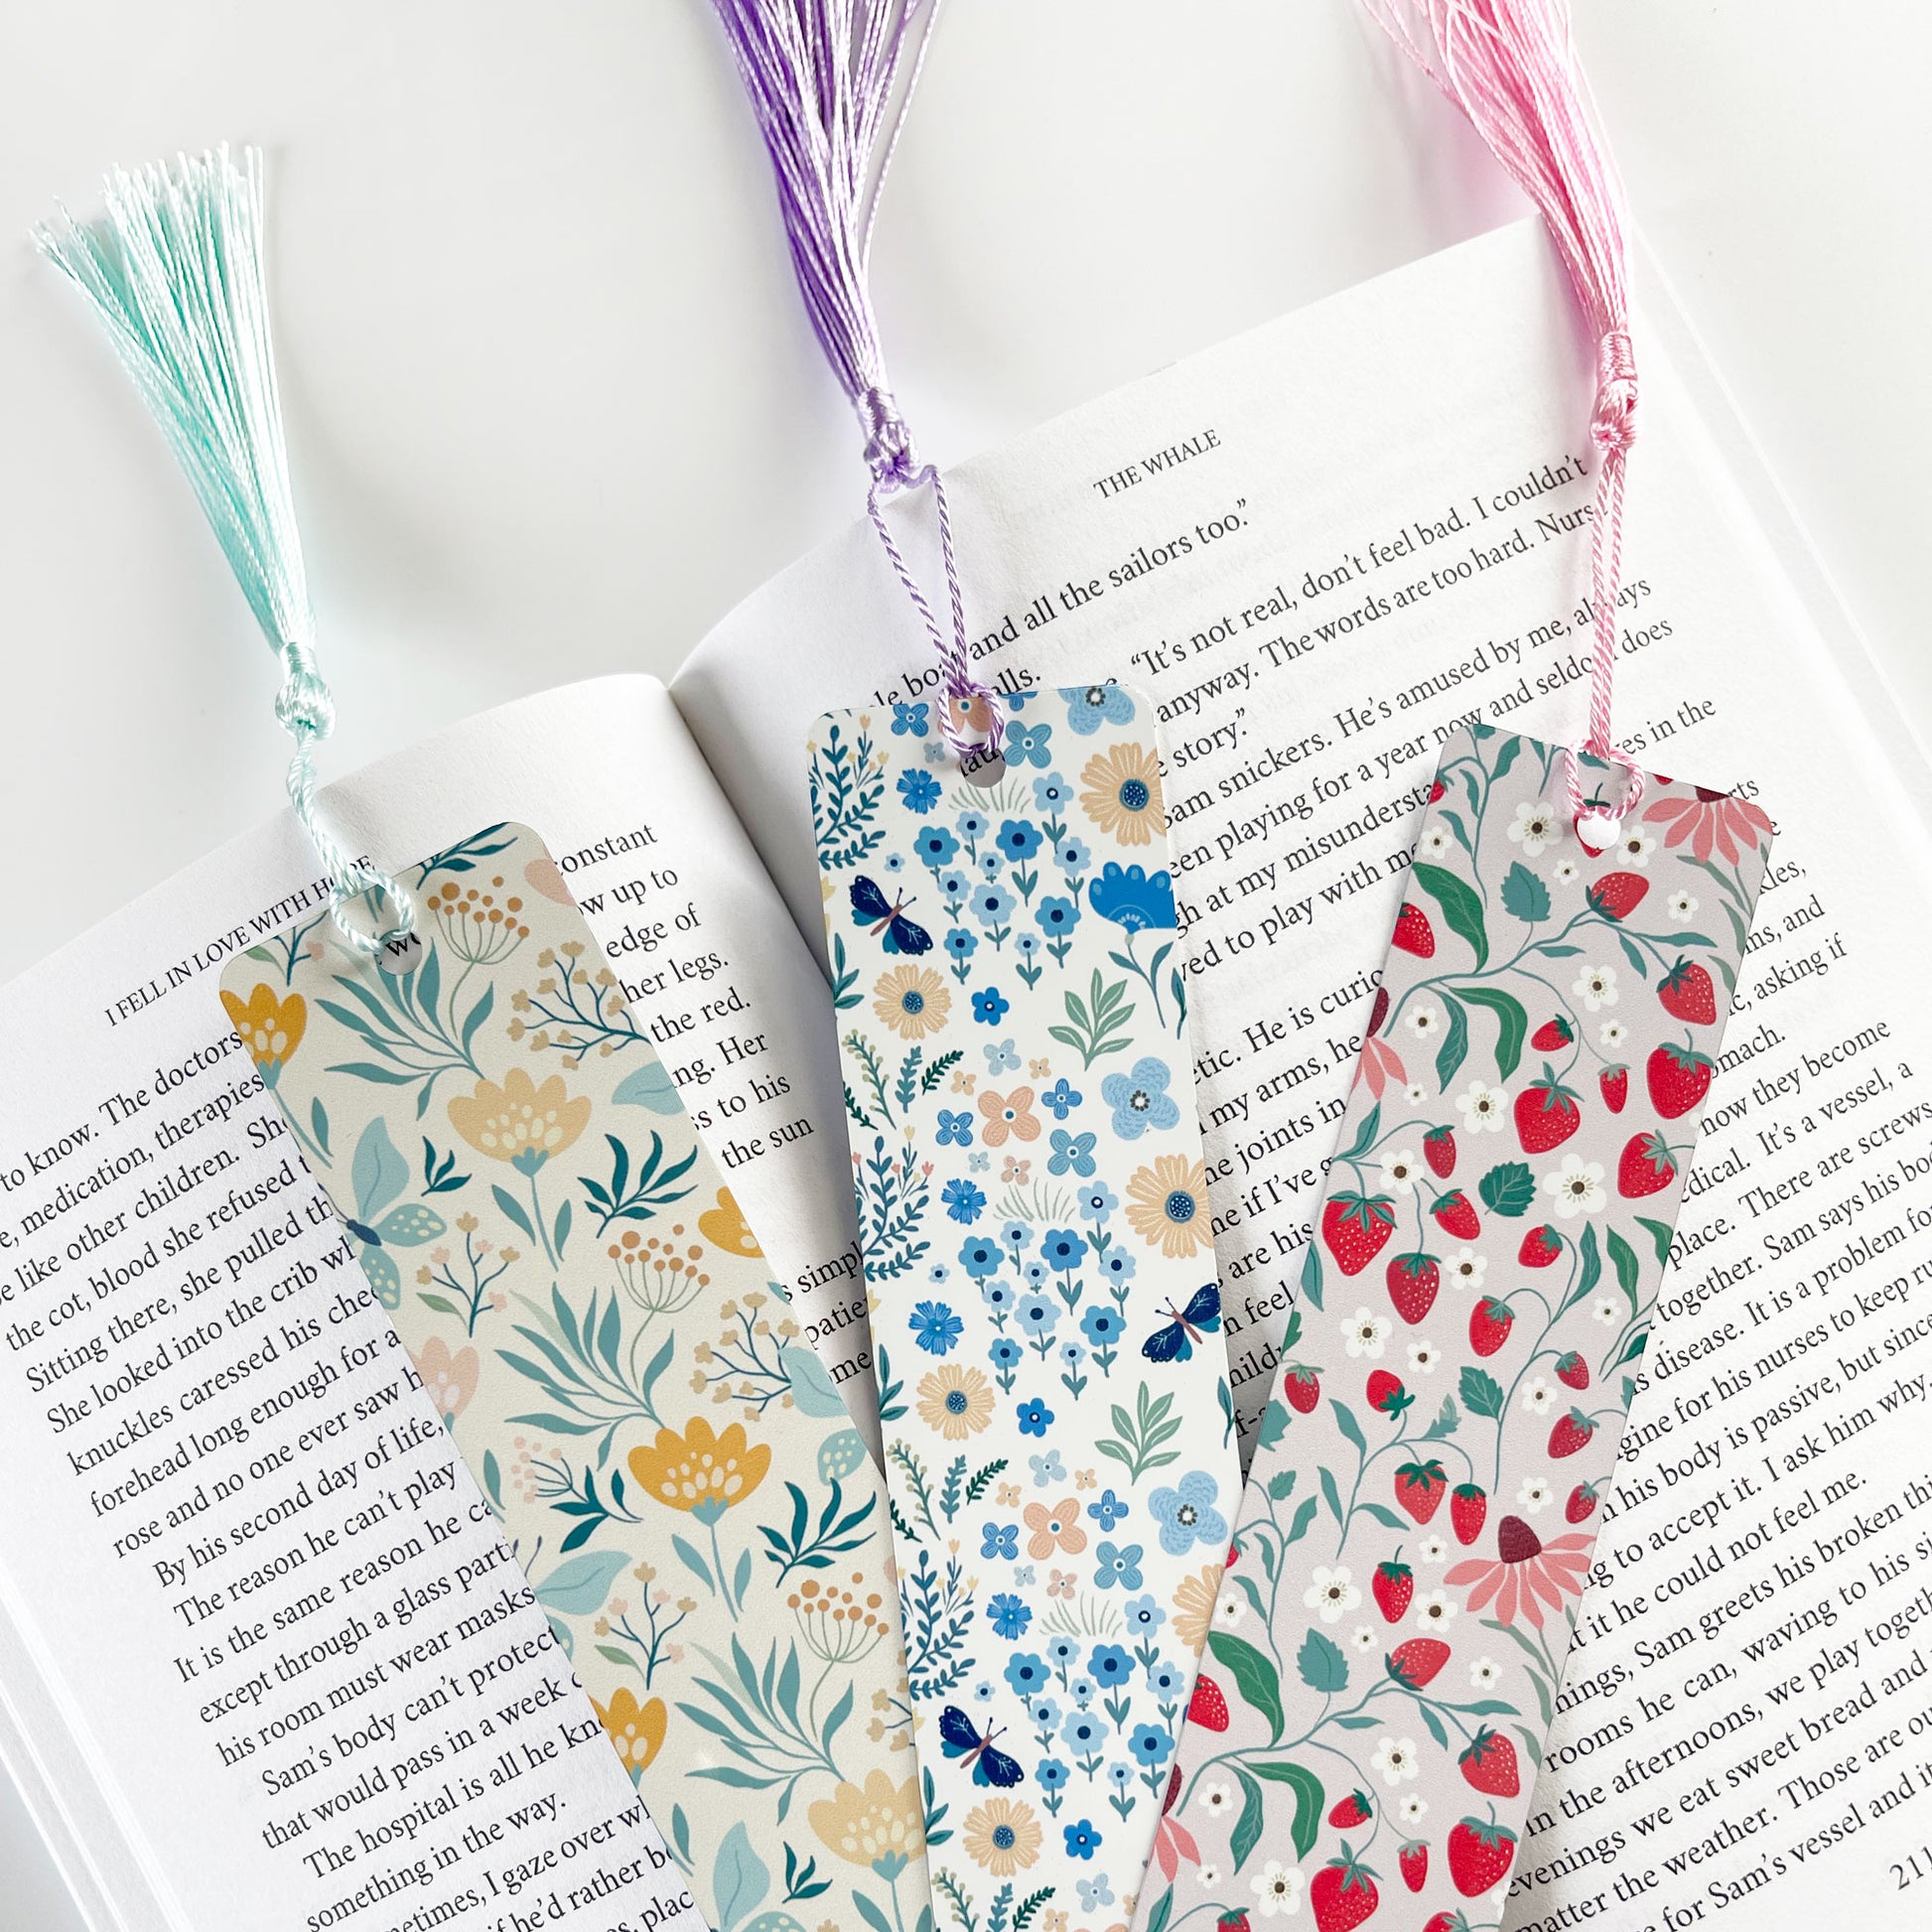 DIY Sublimation Bookmarks